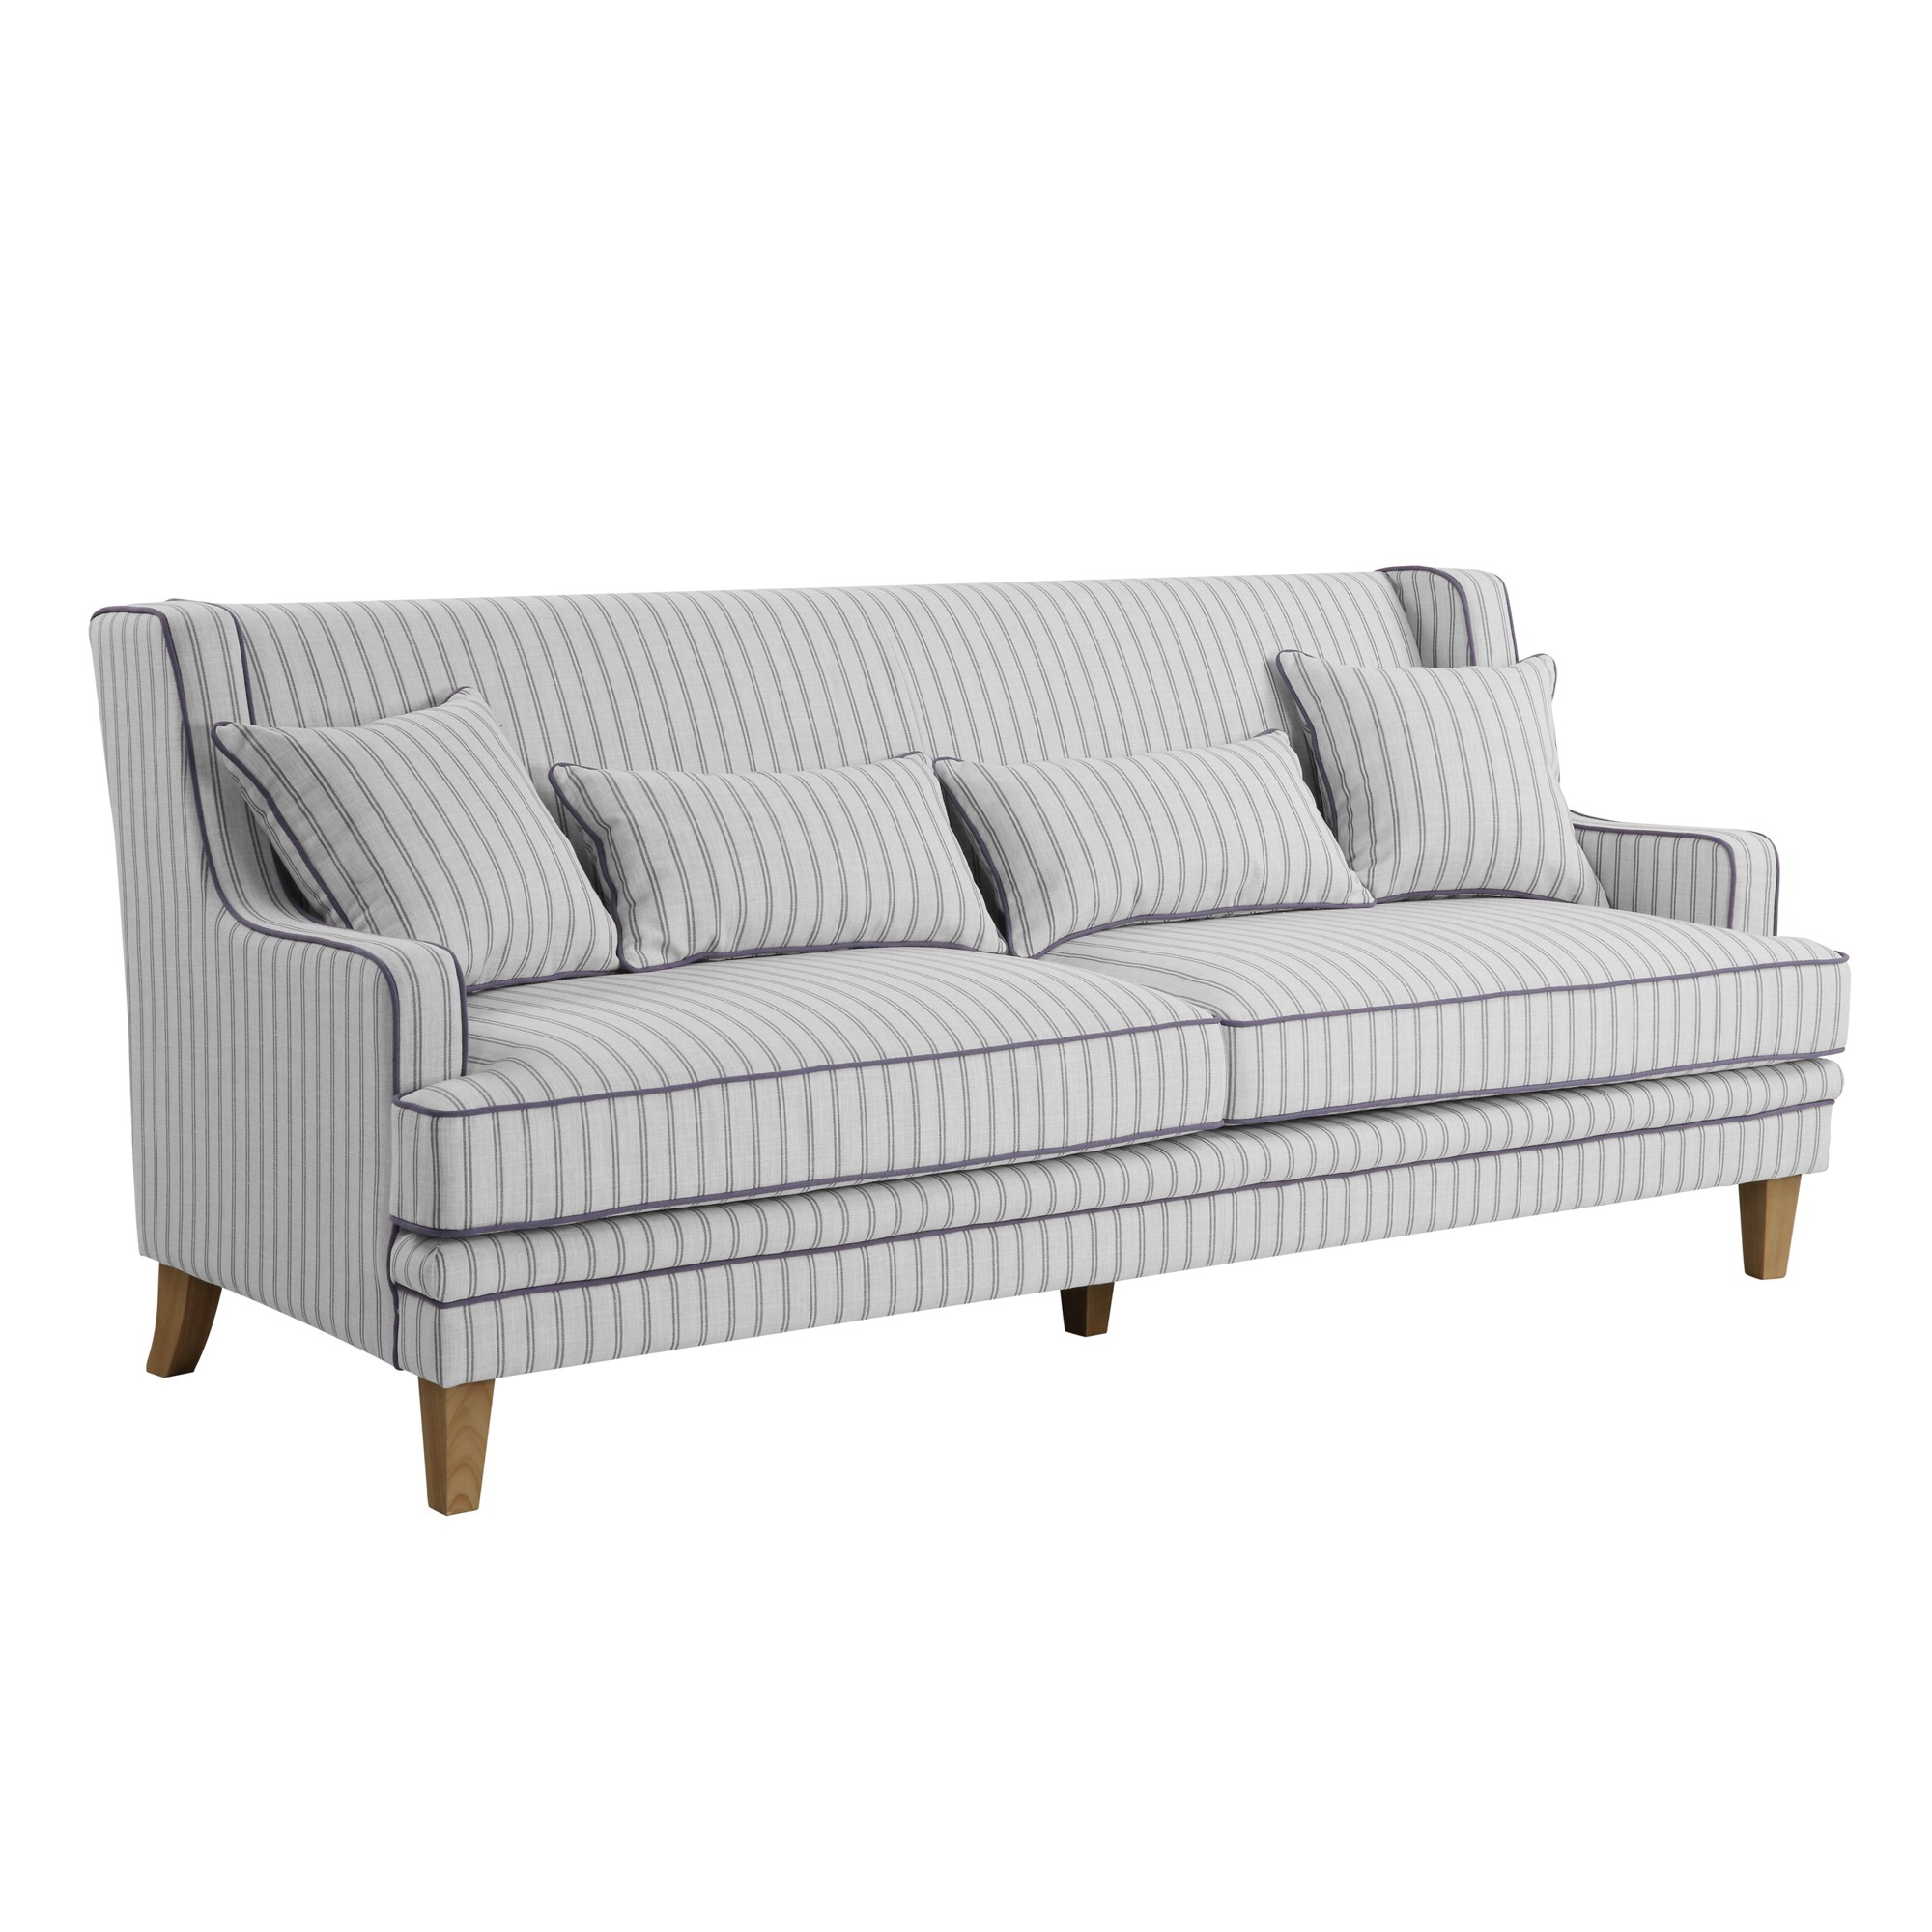 Rachel Ashwell Comfy Slipcovered Sofa, Blue/White Stripe One Kings Lane in 2020